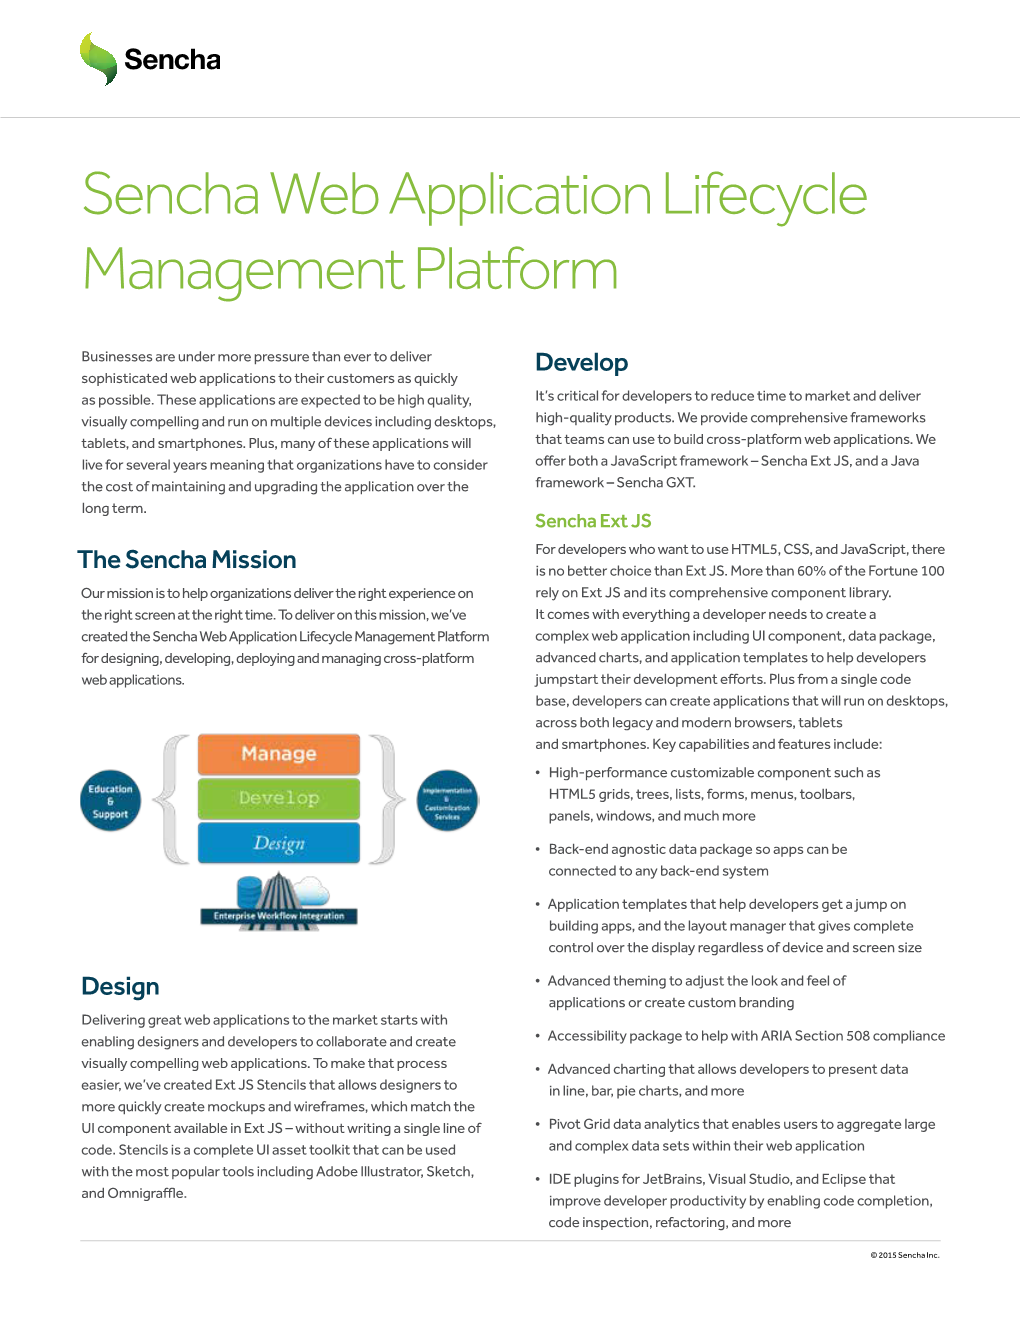 Sencha Web Application Lifecycle Management Platform